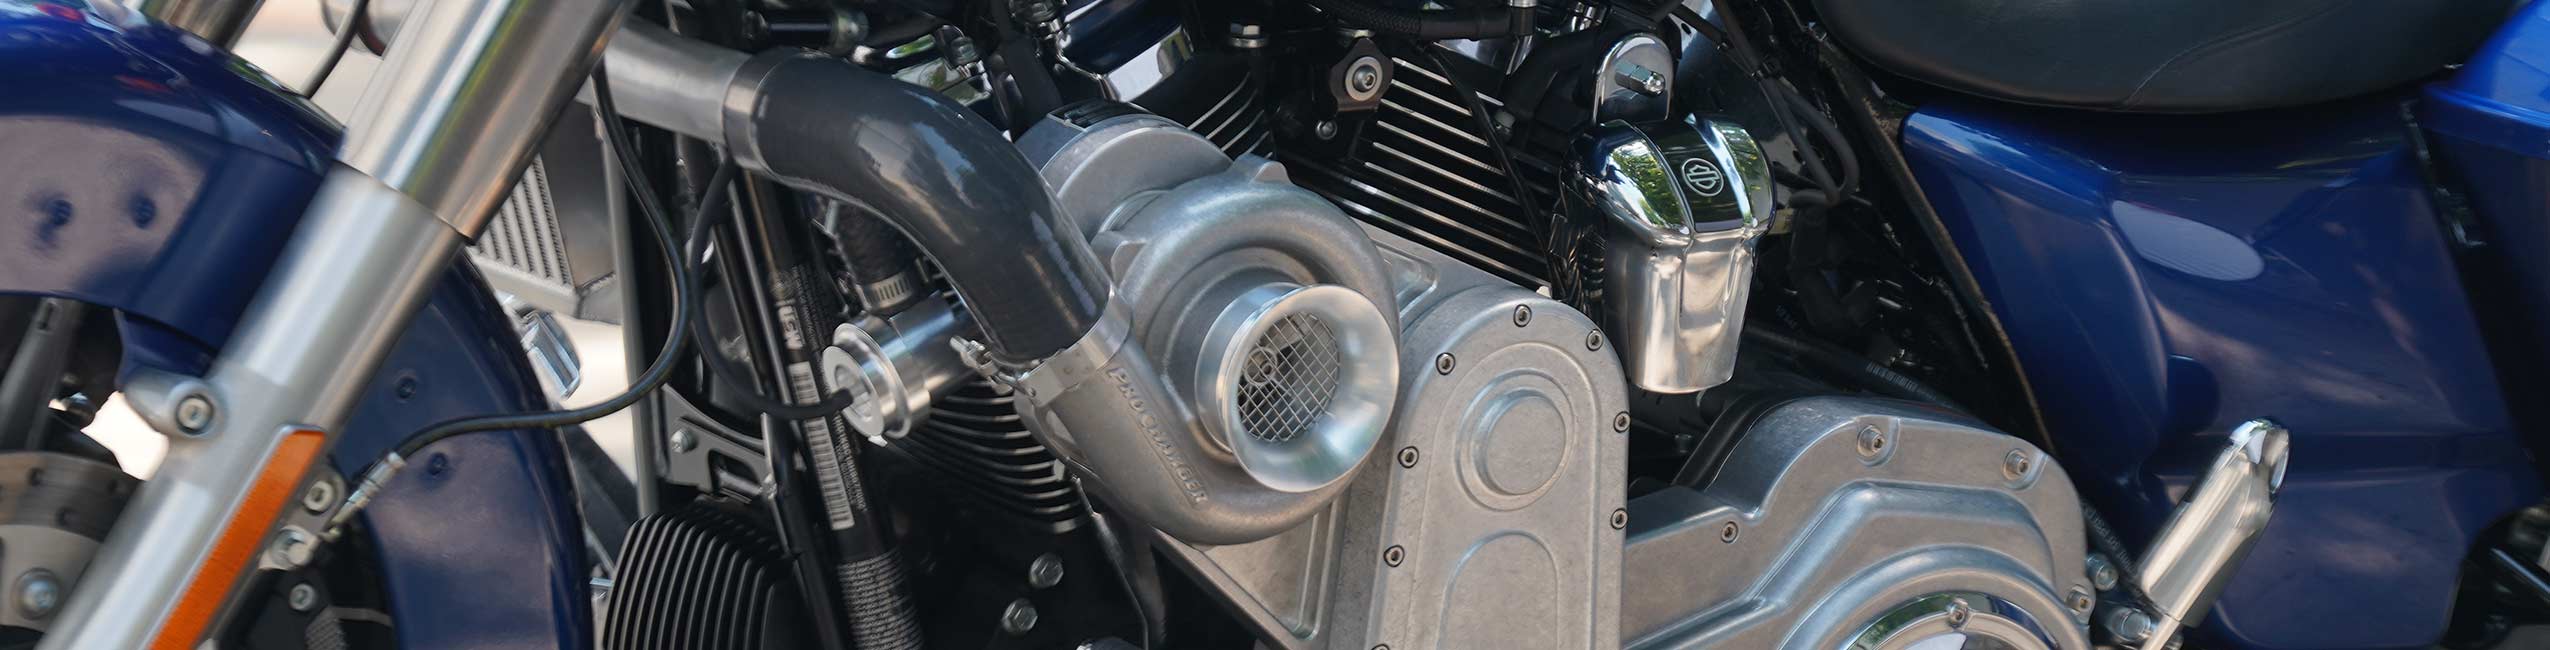 Harley-Davidson M8 Superchargers